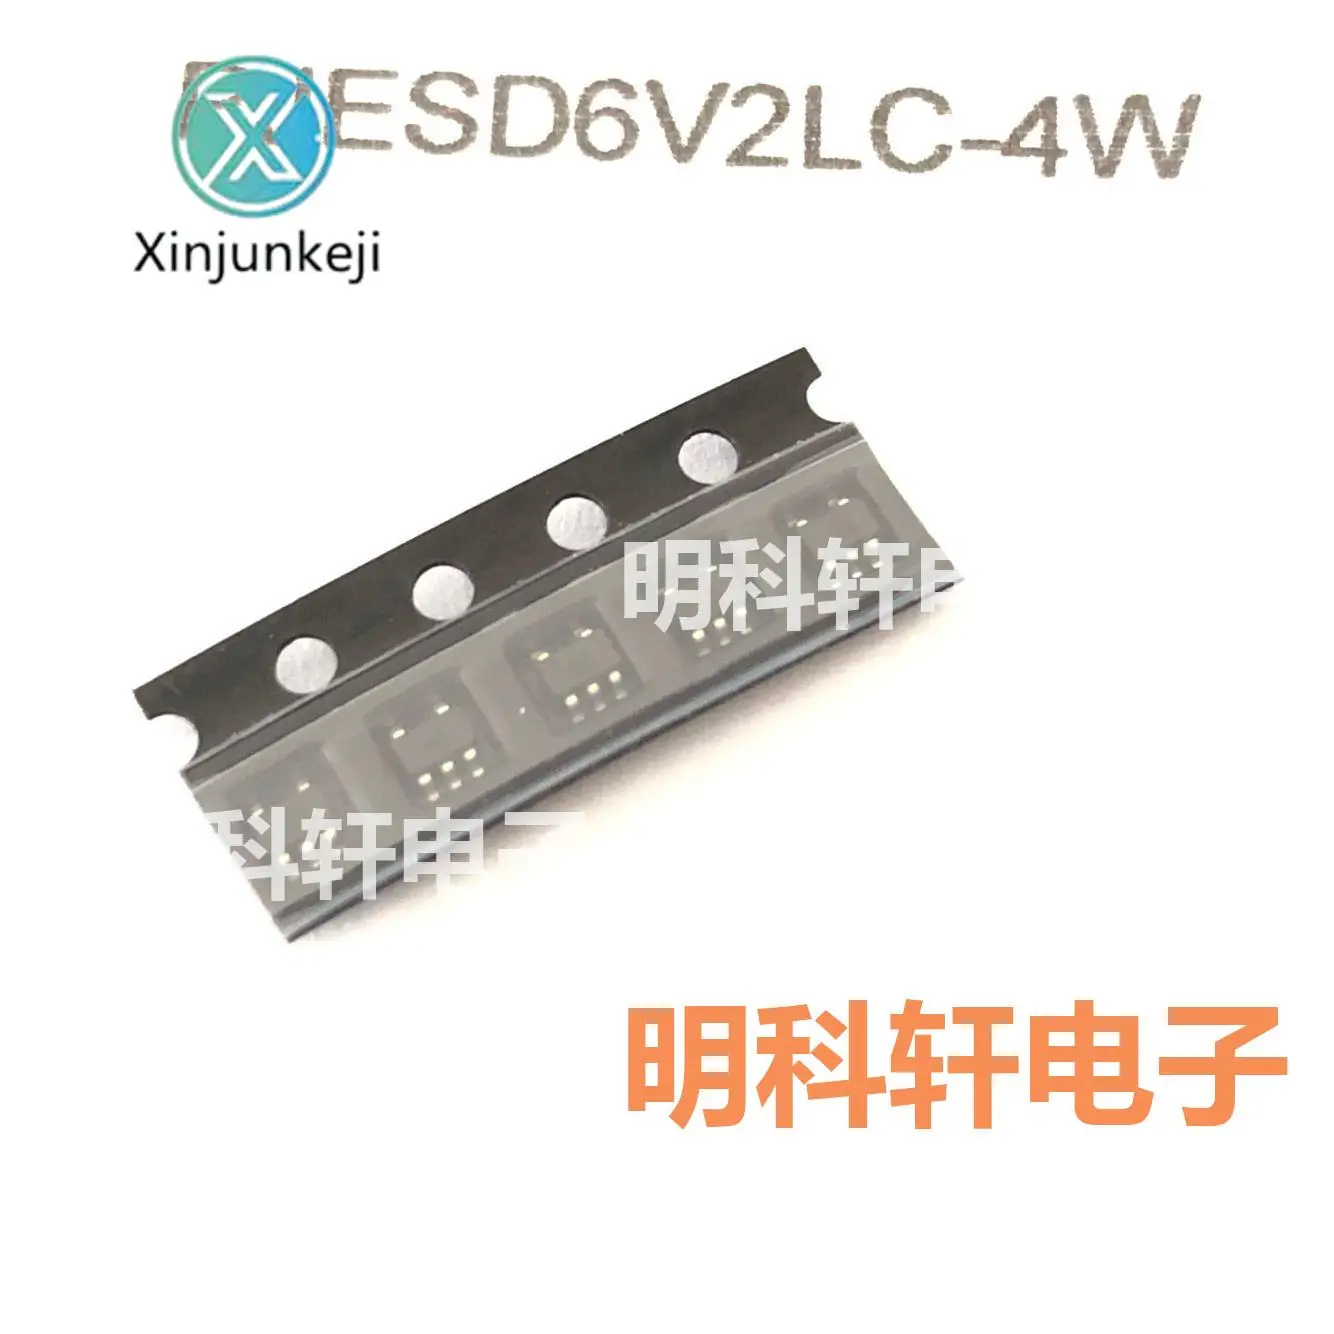 

30pcs orginal new PJESD6V2LC-4W SOT353 ESD protection diode